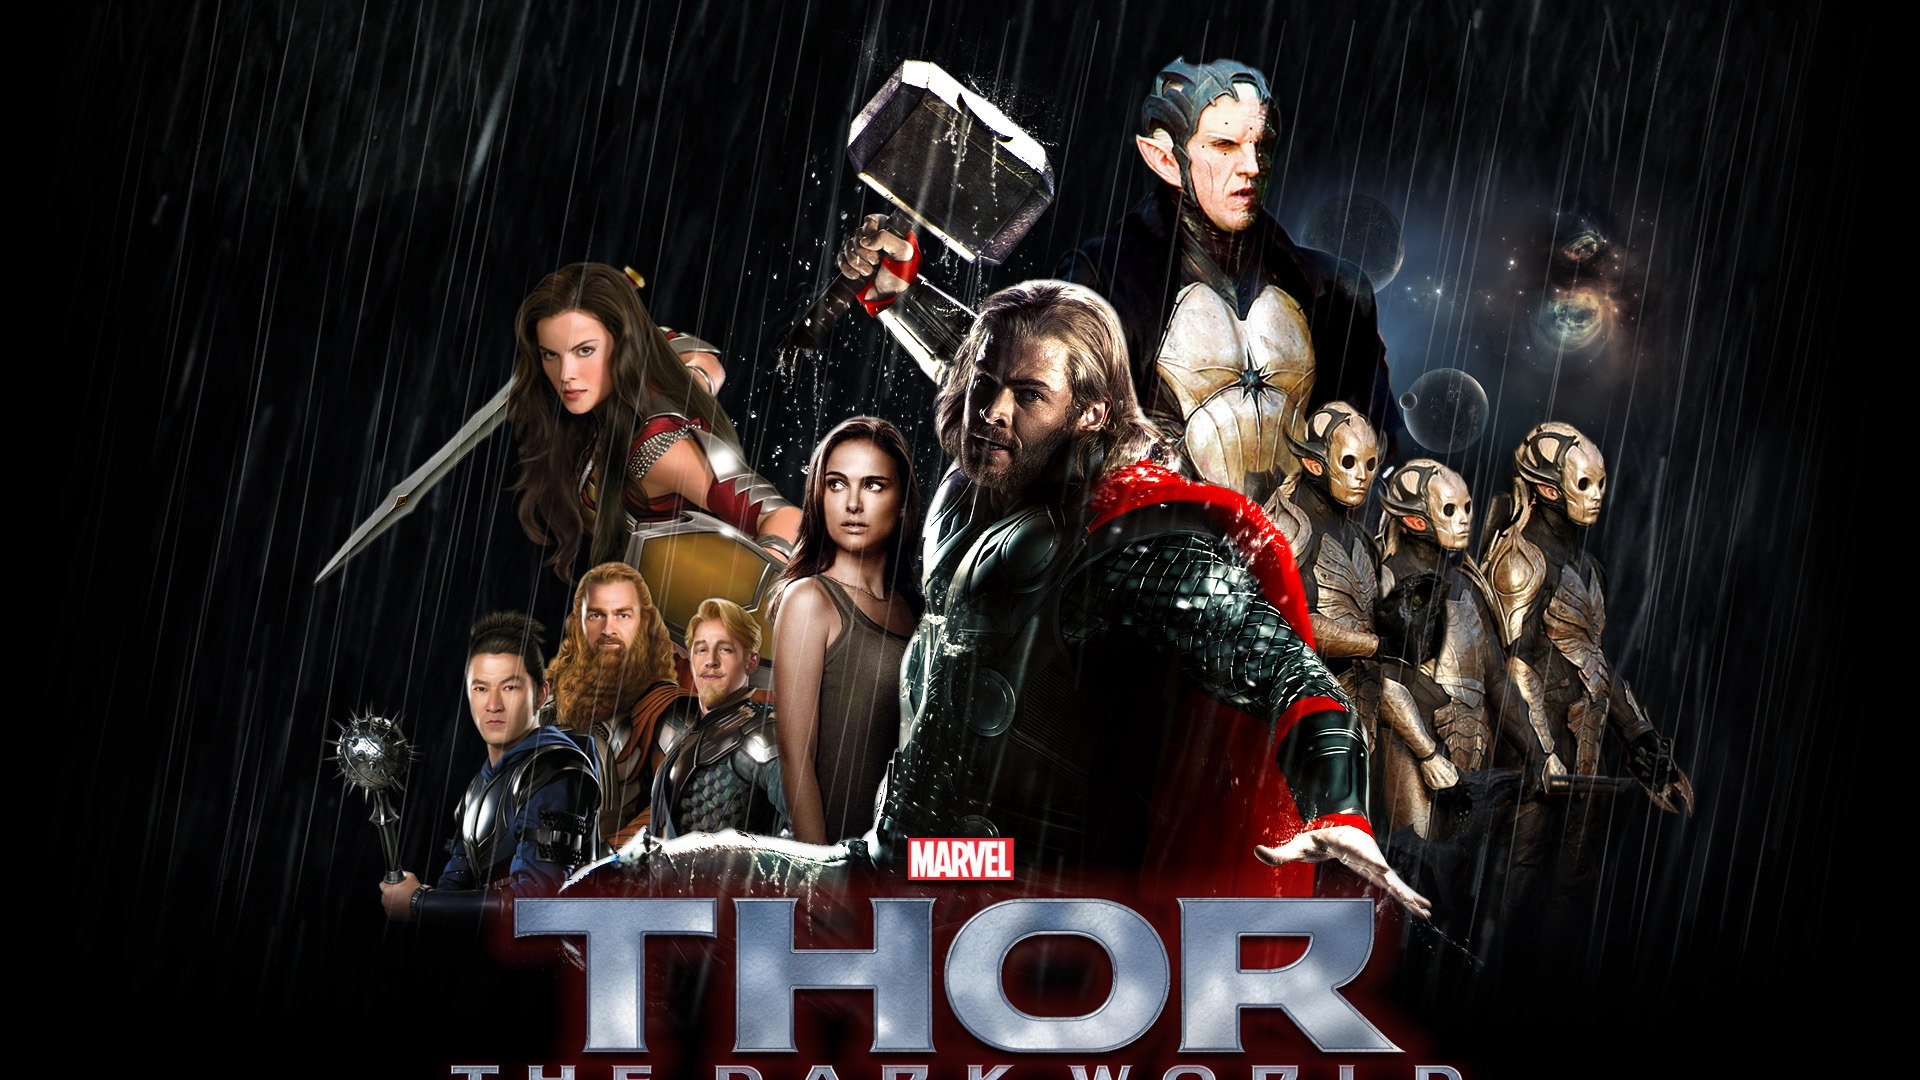 Thor The Dark World 2013 for 1920 x 1080 HDTV 1080p resolution